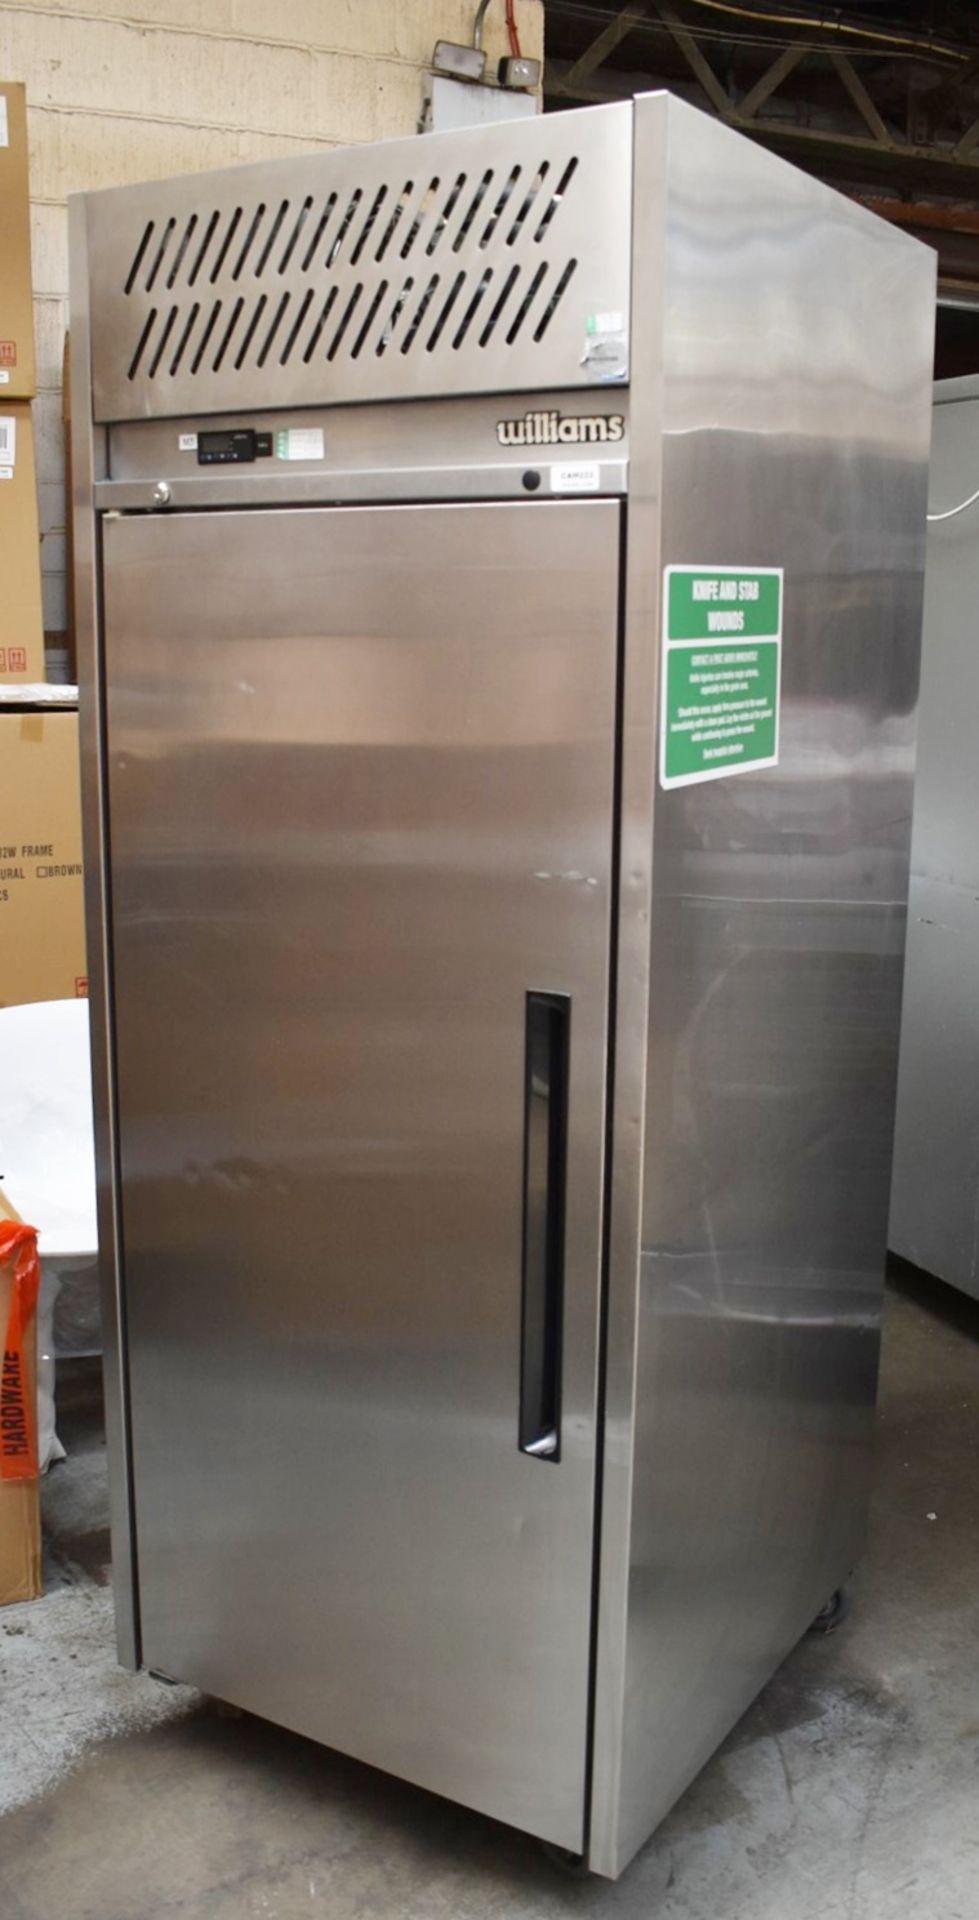 1 x Williams Upright Single Door Refrigerator With Stainless Steel Exterior - Model HJ1TSA